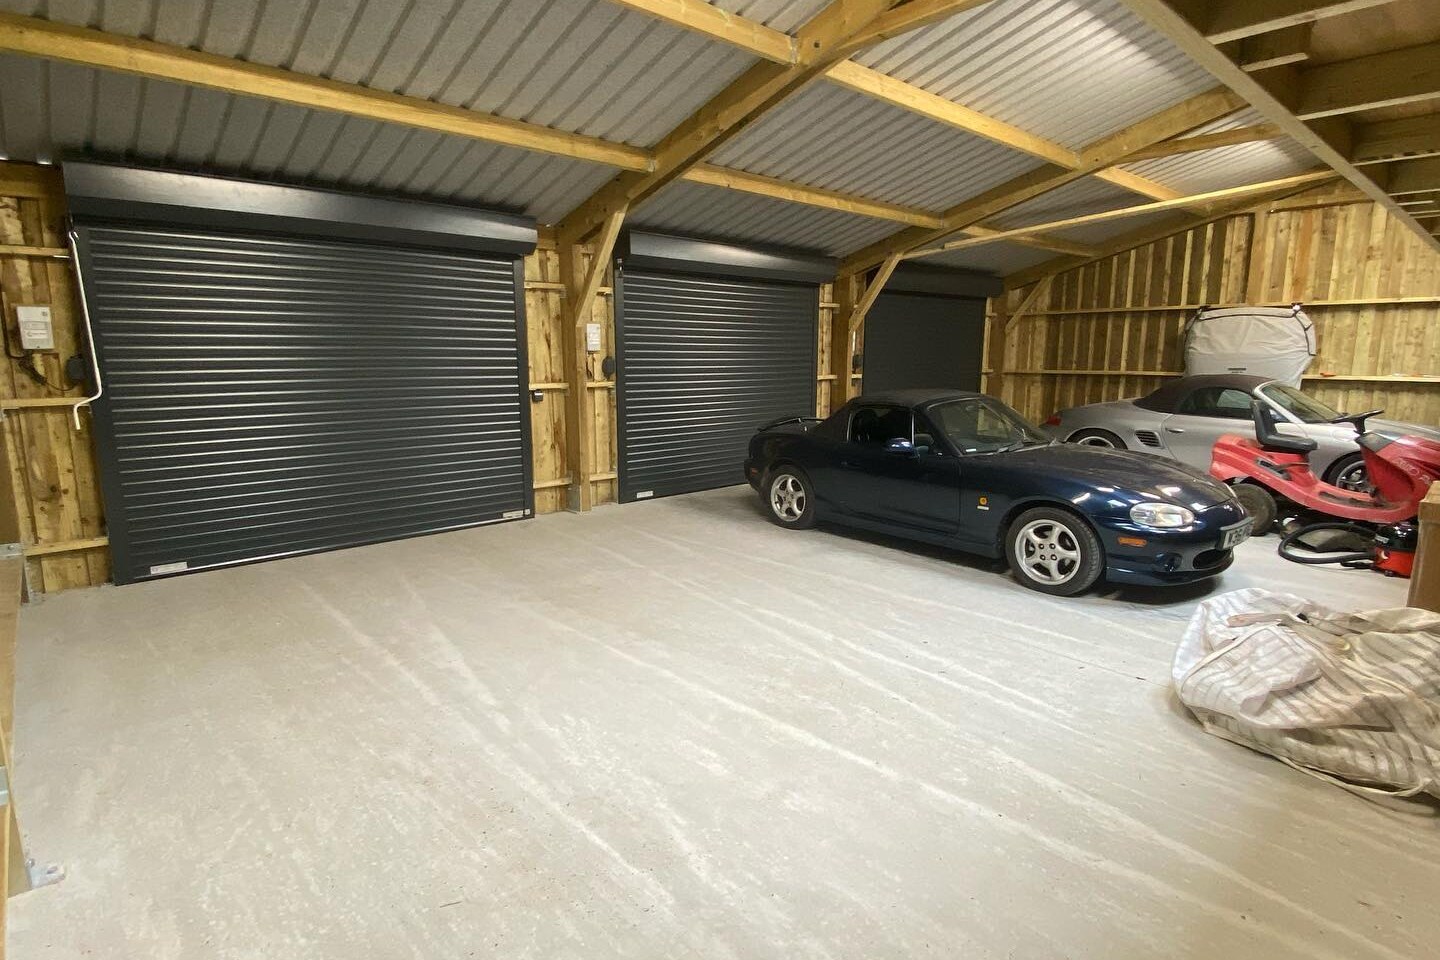 Internal 3 bay garage